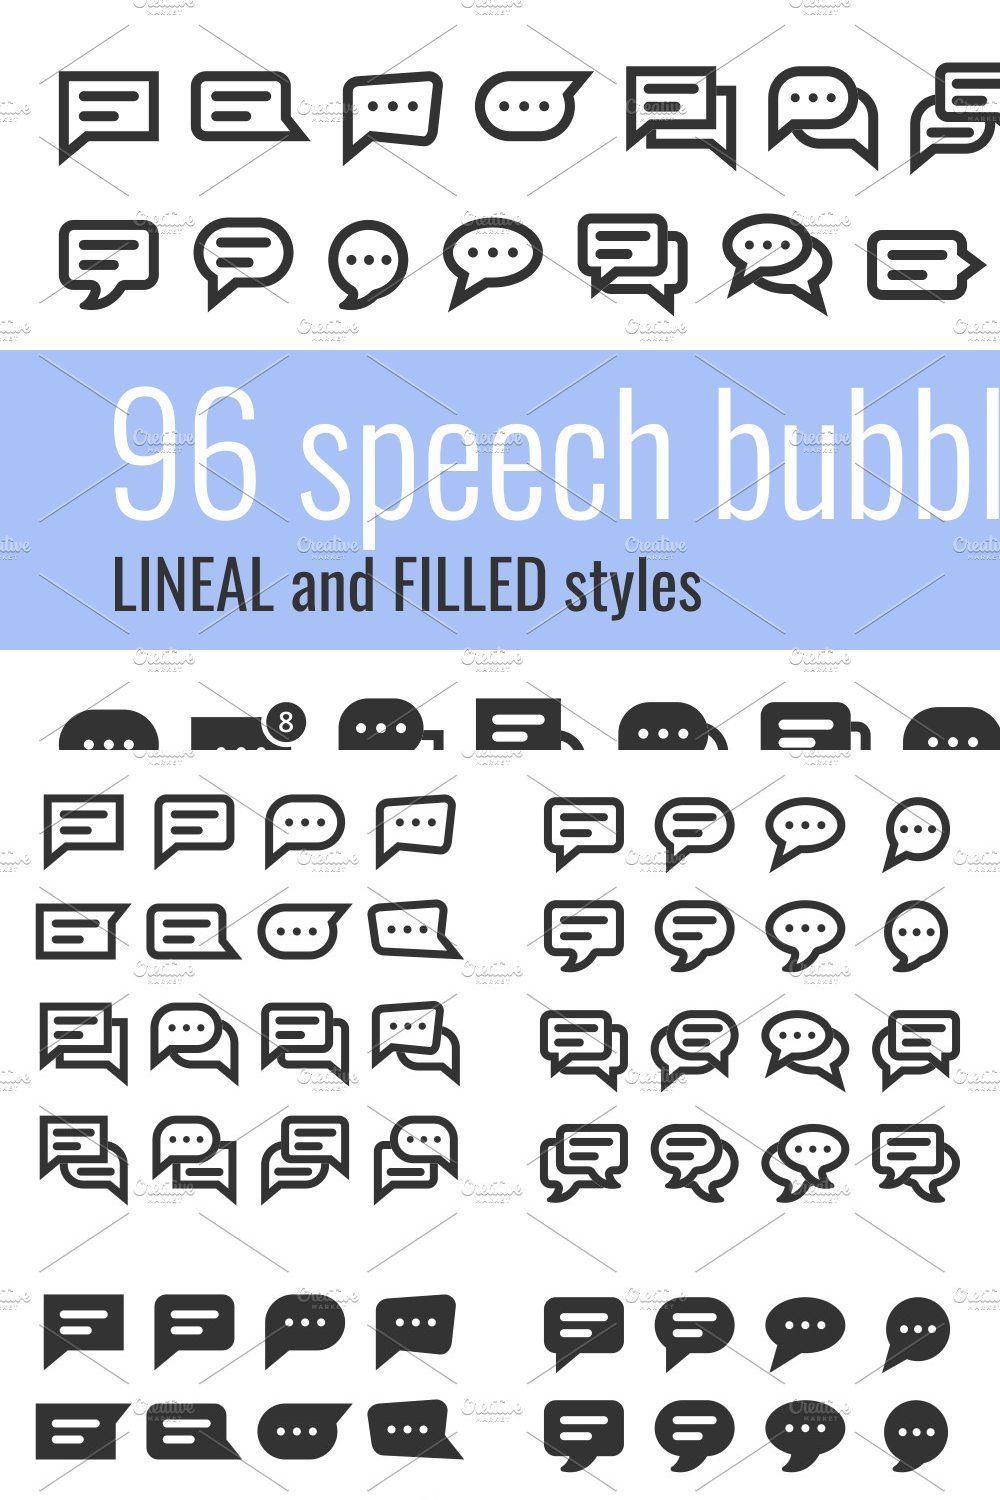 96 speech bubble icons pinterest preview image.